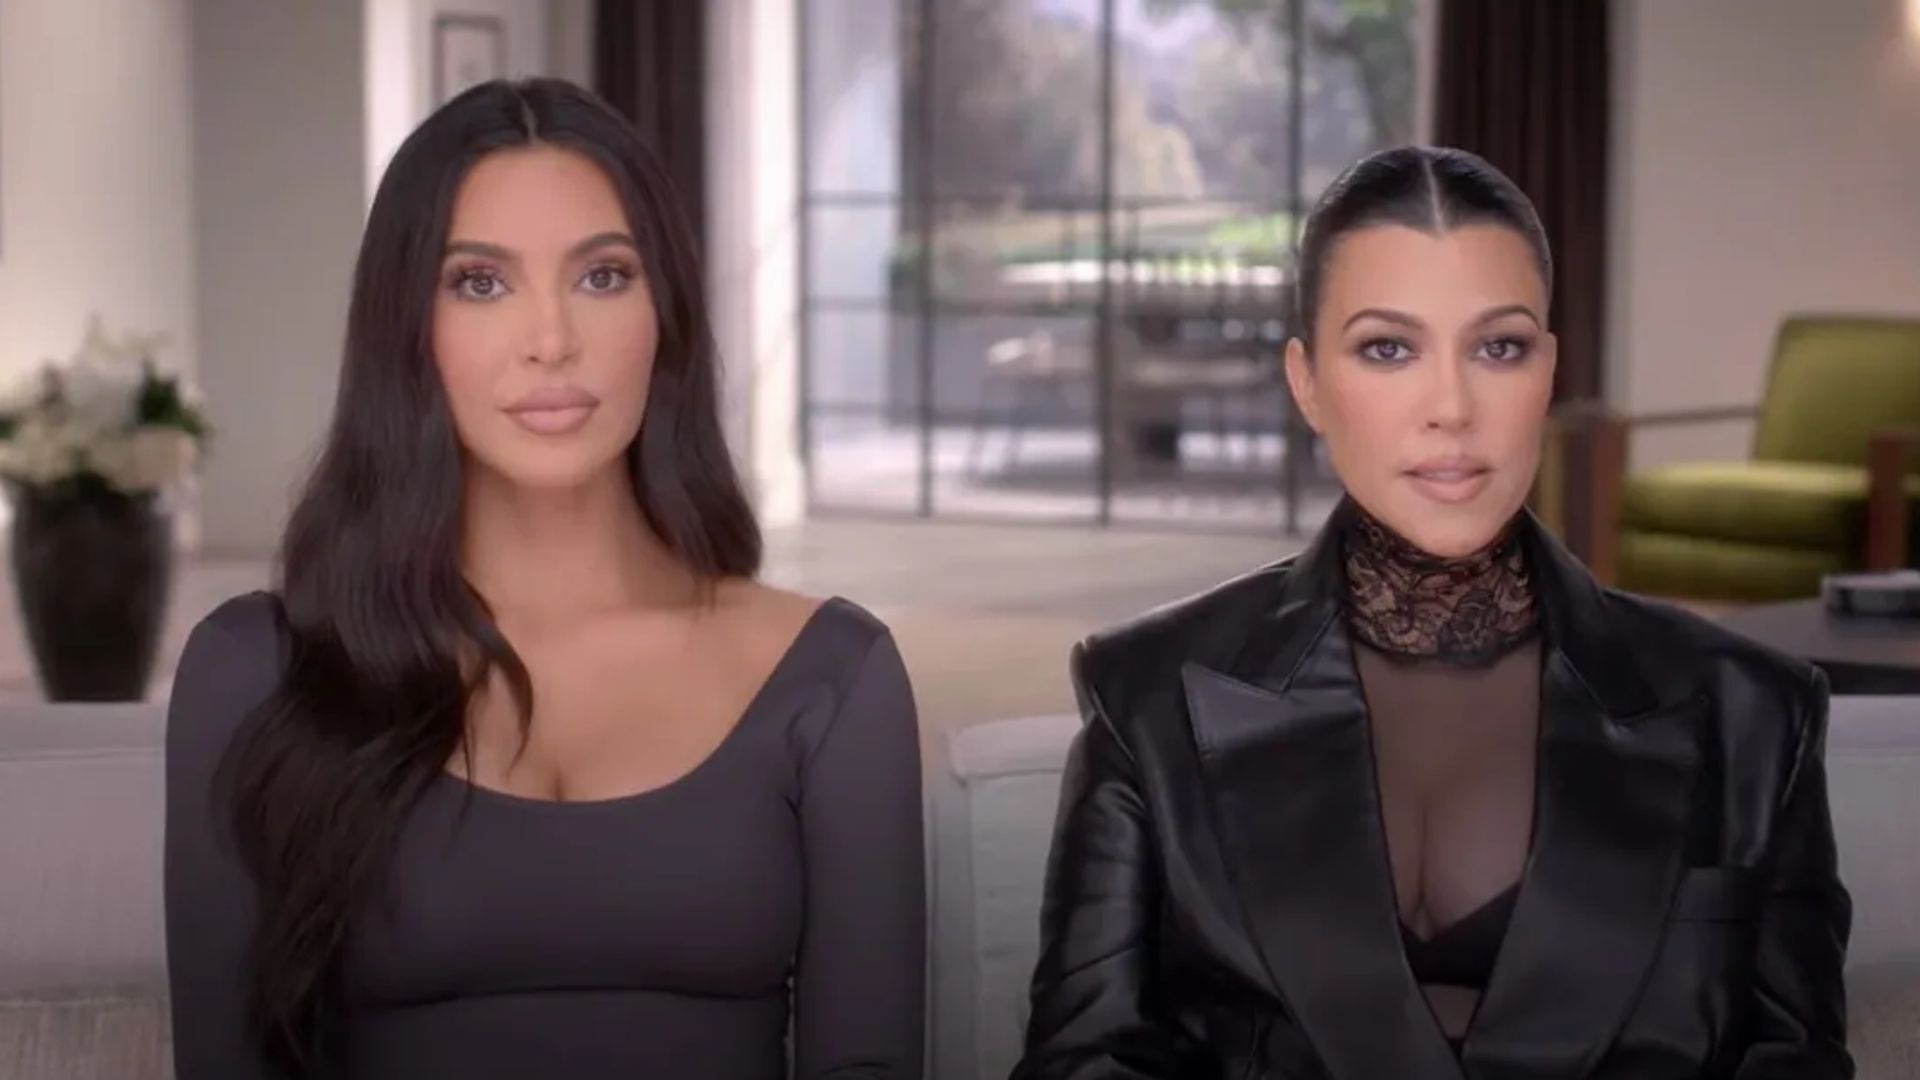 Kim famously had a feud with sister Kourtney on this season of The Kardashians